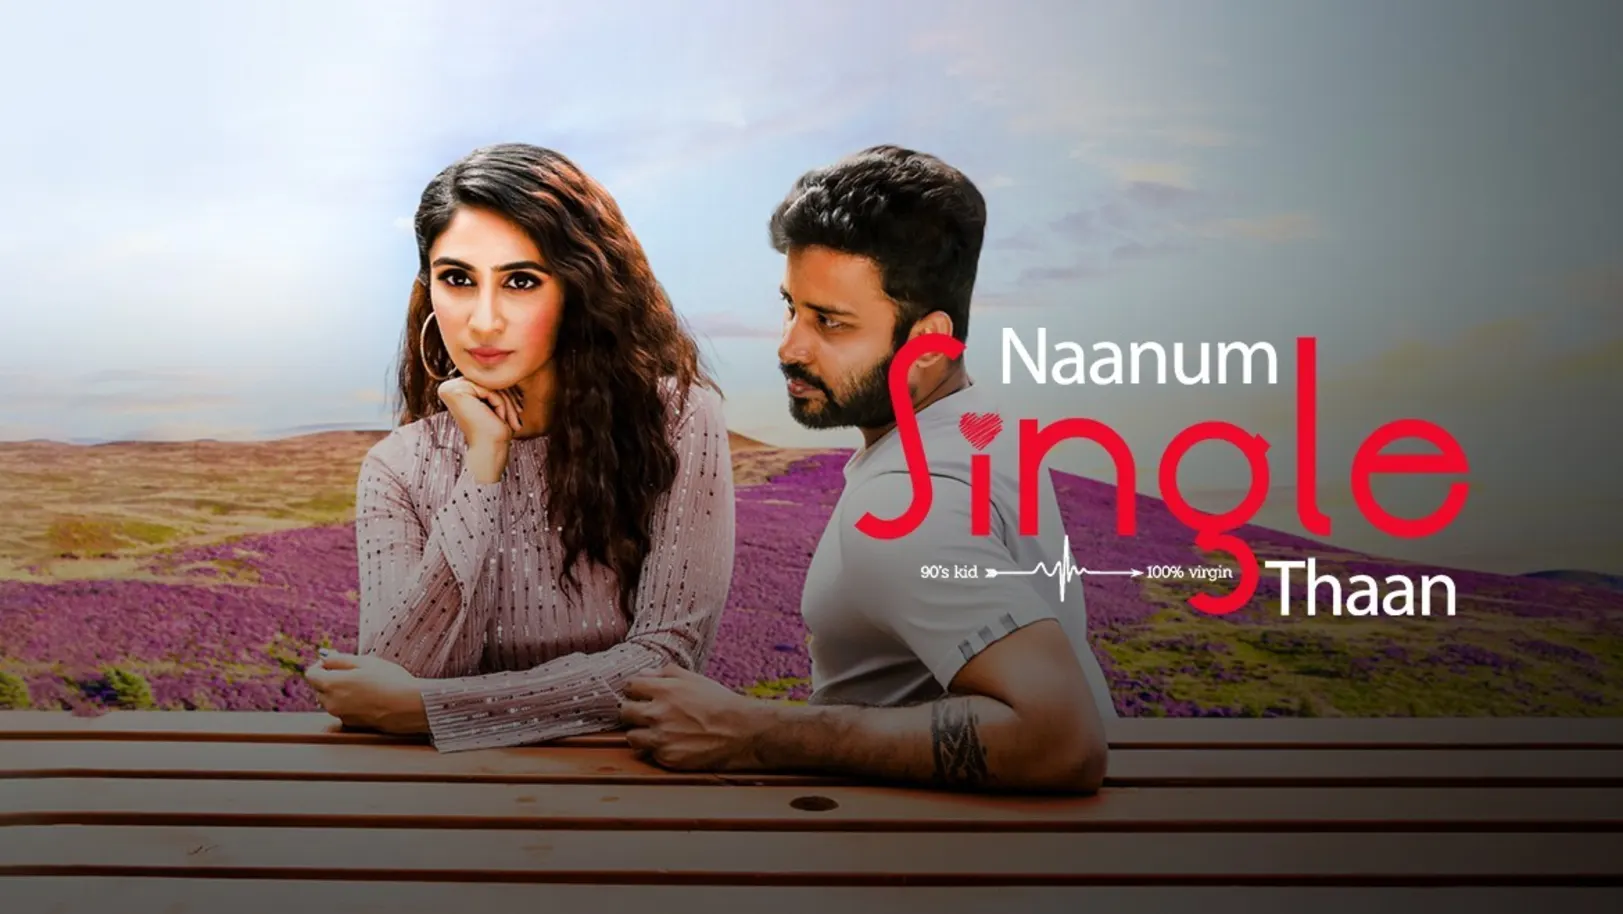 Naanum Single Thaan Movie